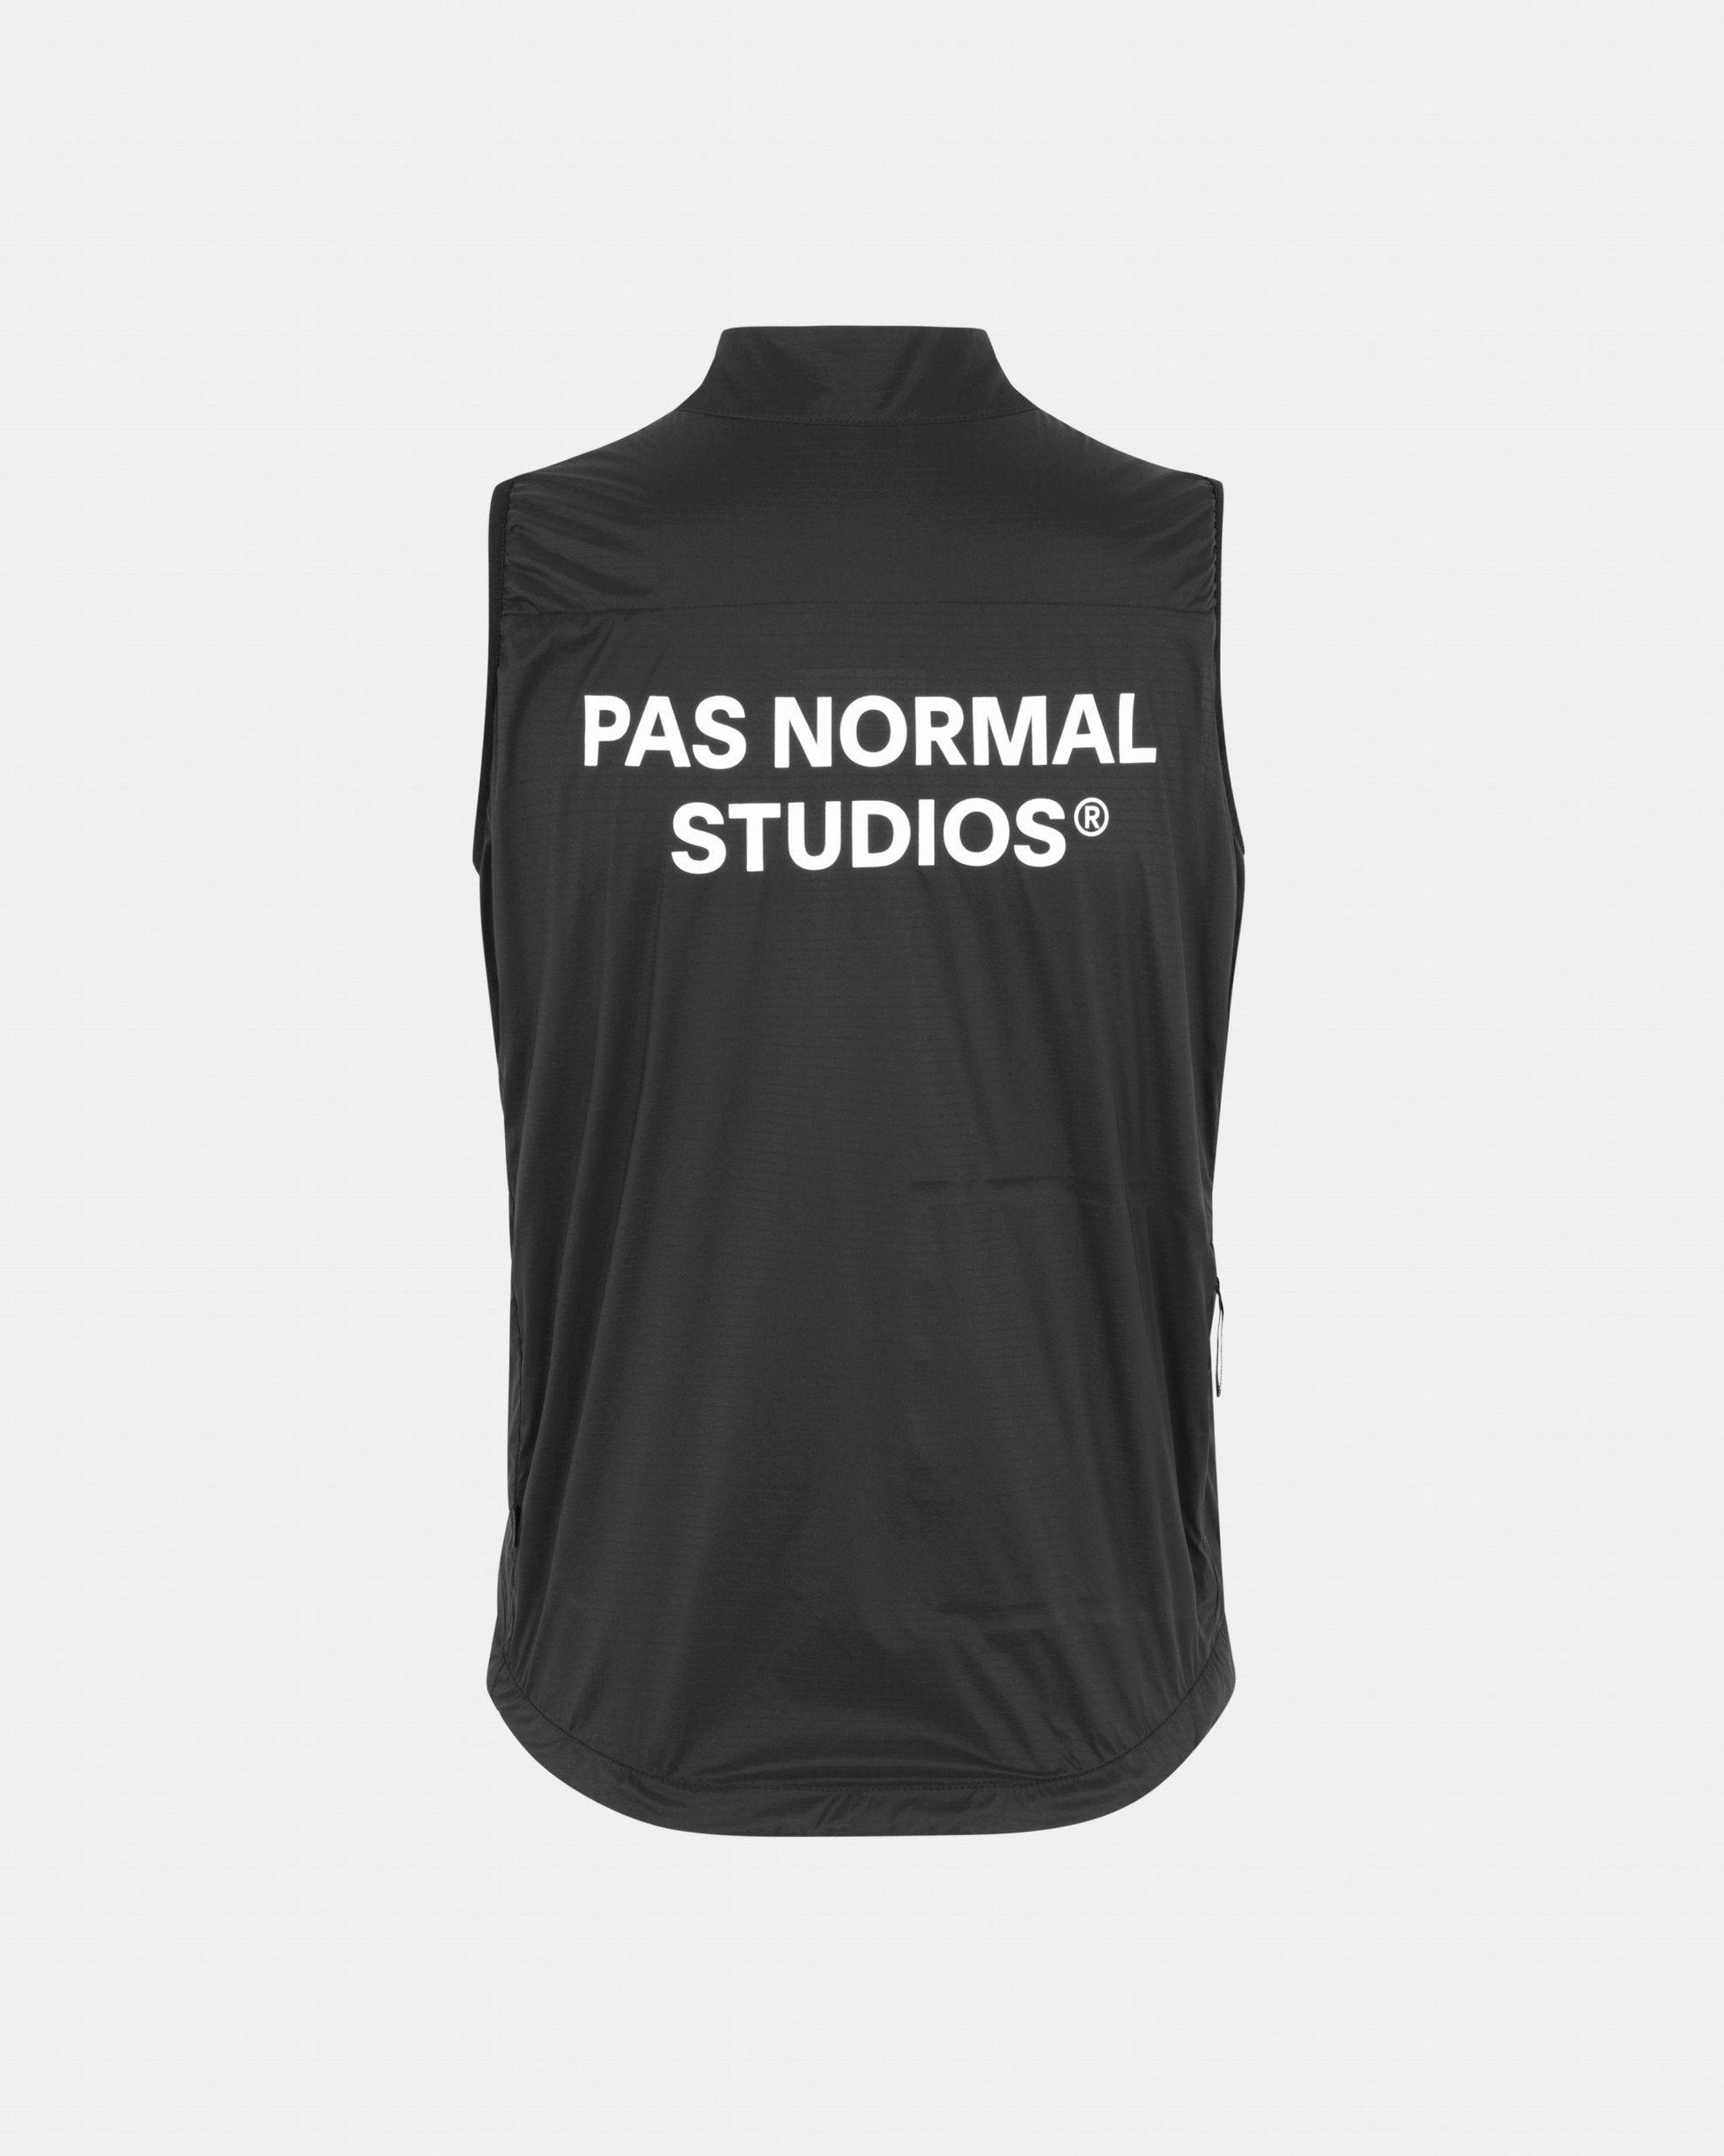 Pas Normal Studios - Veste Essential Insulated Femme Vestes Pas Normal Studios 